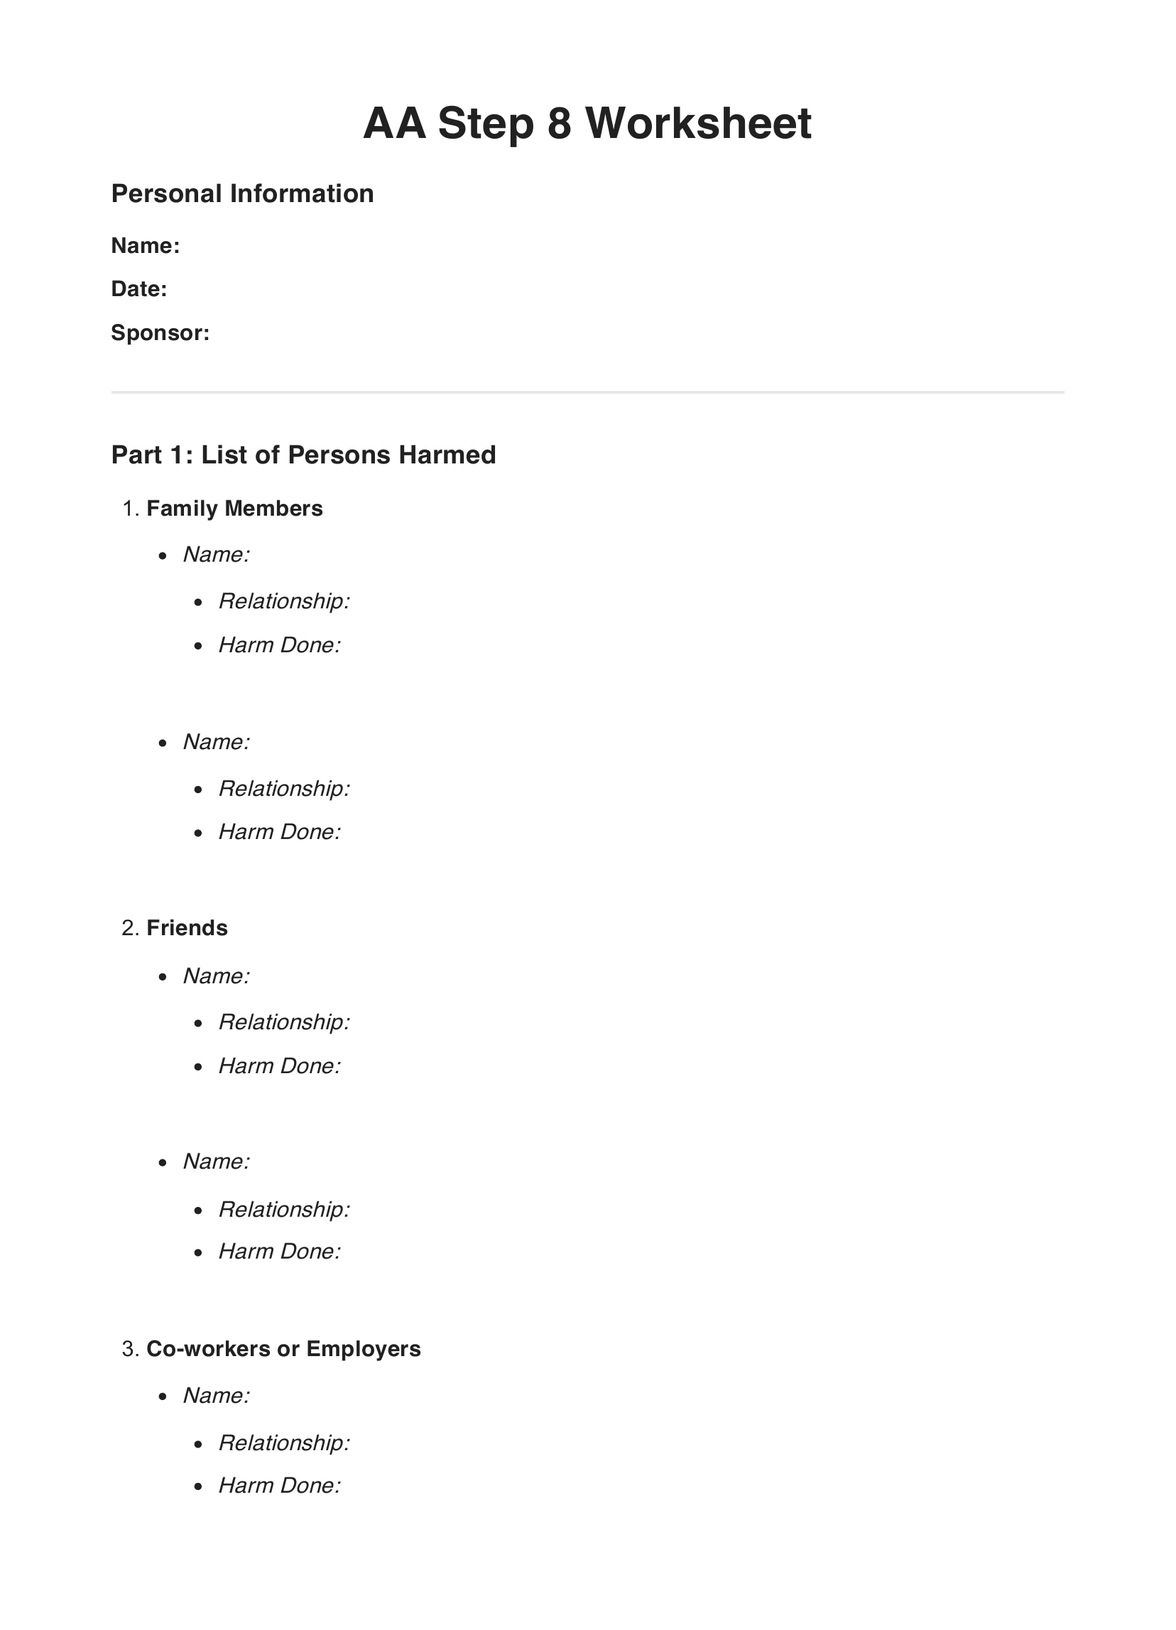 AA Step 8 Worksheets PDF Example